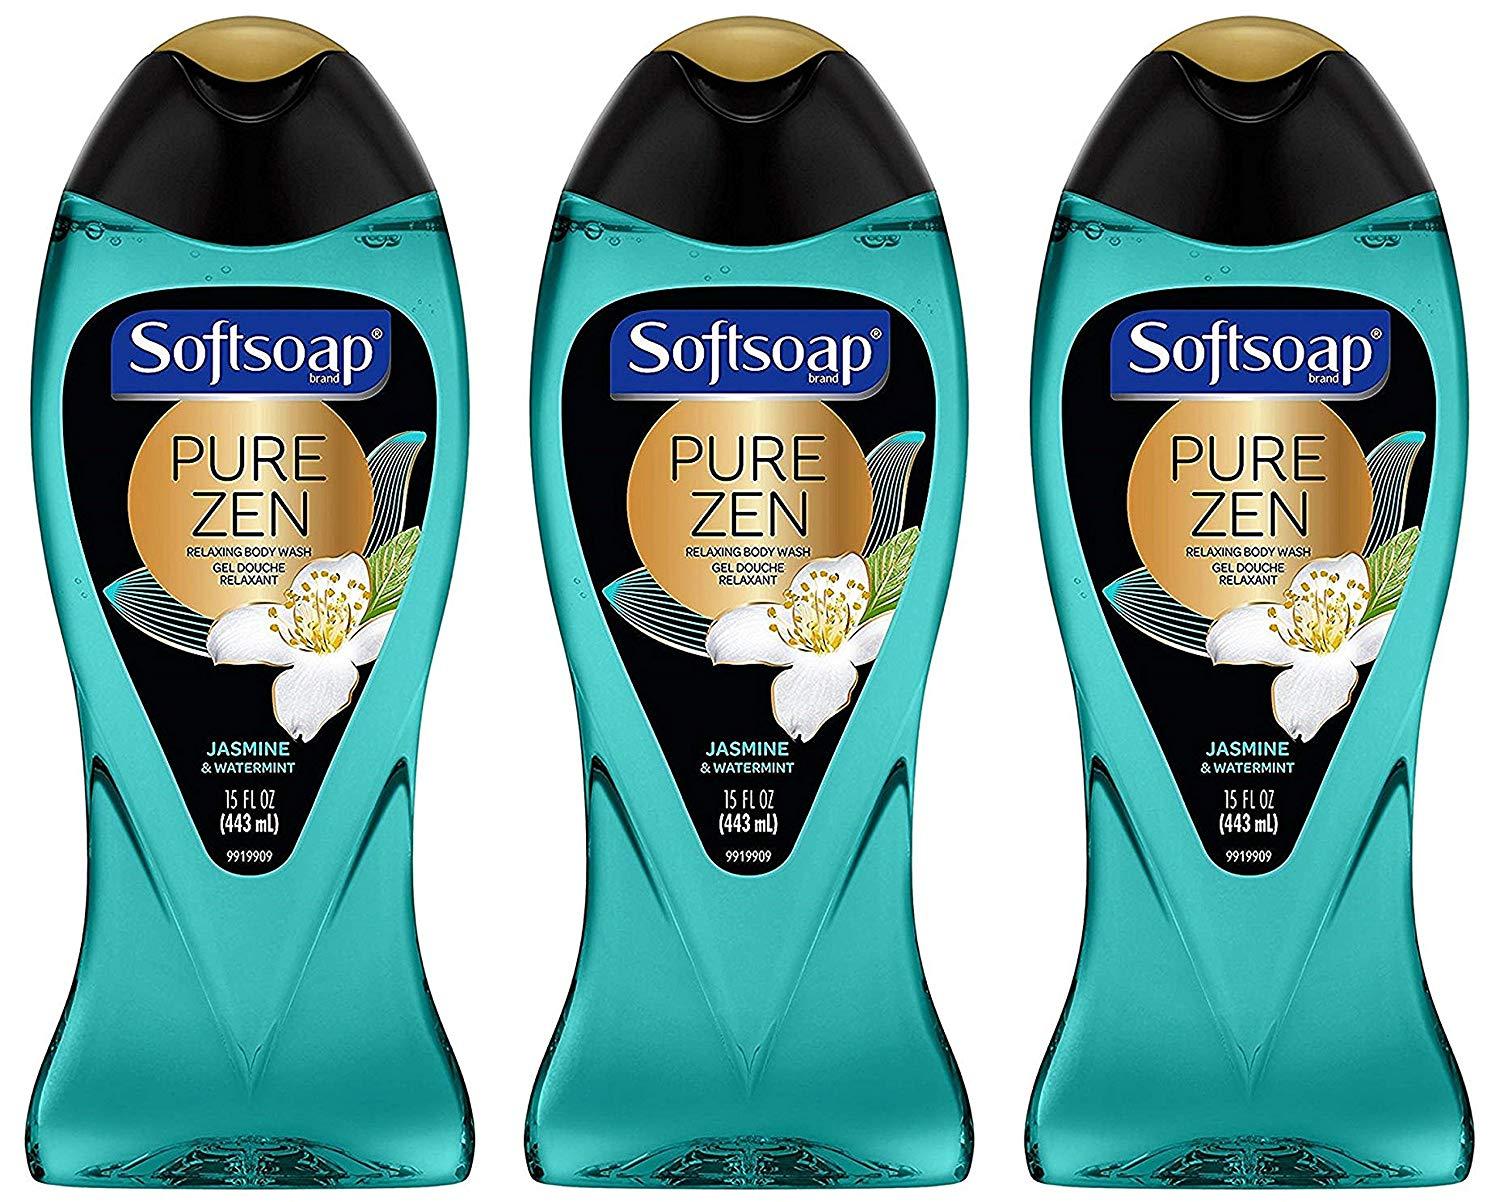 Softsoap Logo - Softsoap Relaxing Body Wash - Pure Zen - Jasmine & Watermint - Net Wt. 15  FL OZ (443 mL) Per...